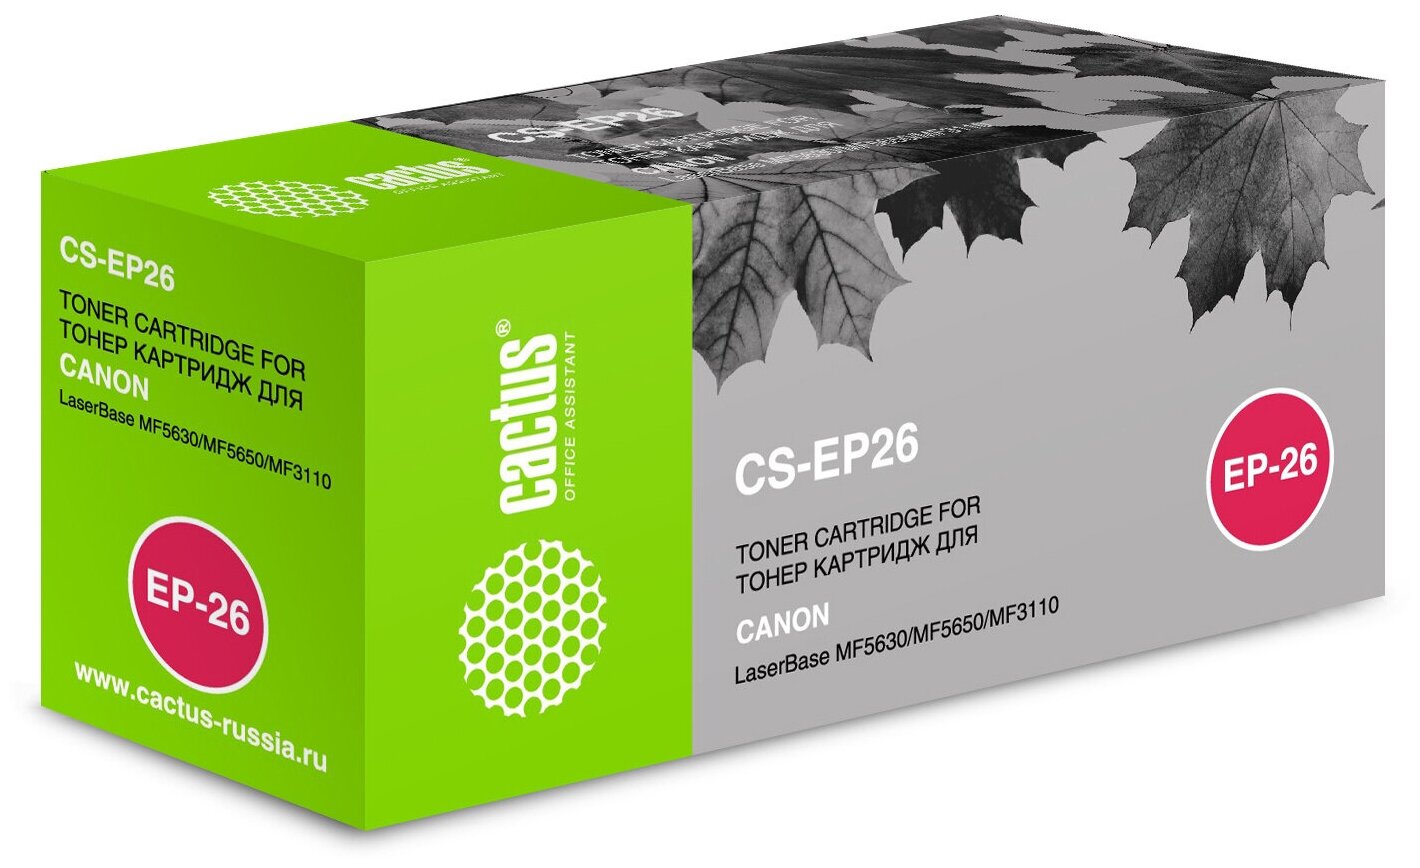 Картридж EP-26 для Кэнон, Canon LBP 27, LBP 300, LBP 3200 Laser Shot, LBP 3240 i-Sensys, SmartBase MF27